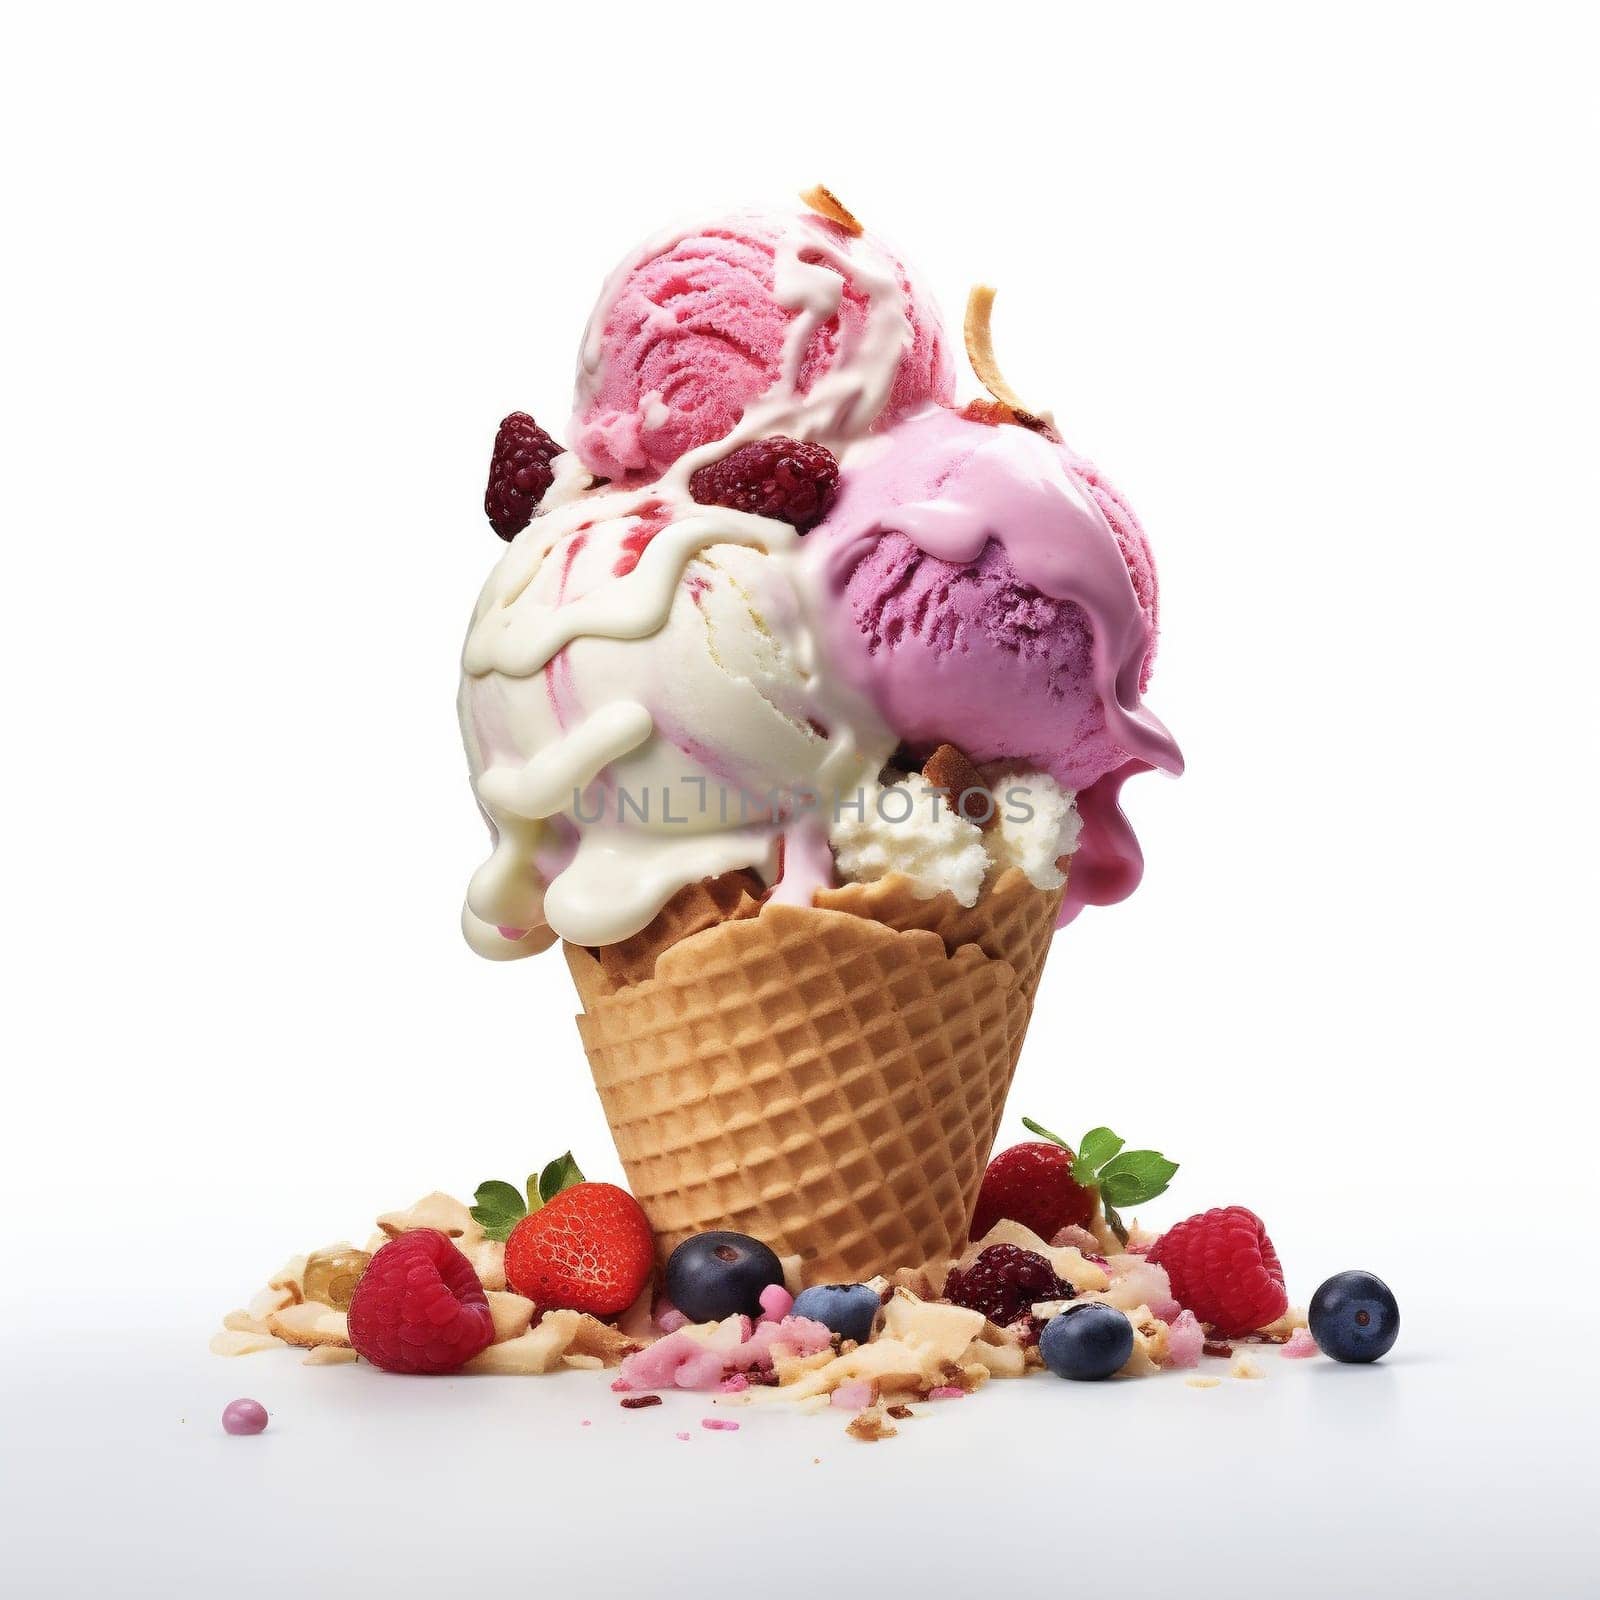 Ice Cream Cone Vanilla and Strawberry Flavors Isolated on White Background. by Rina_Dozornaya